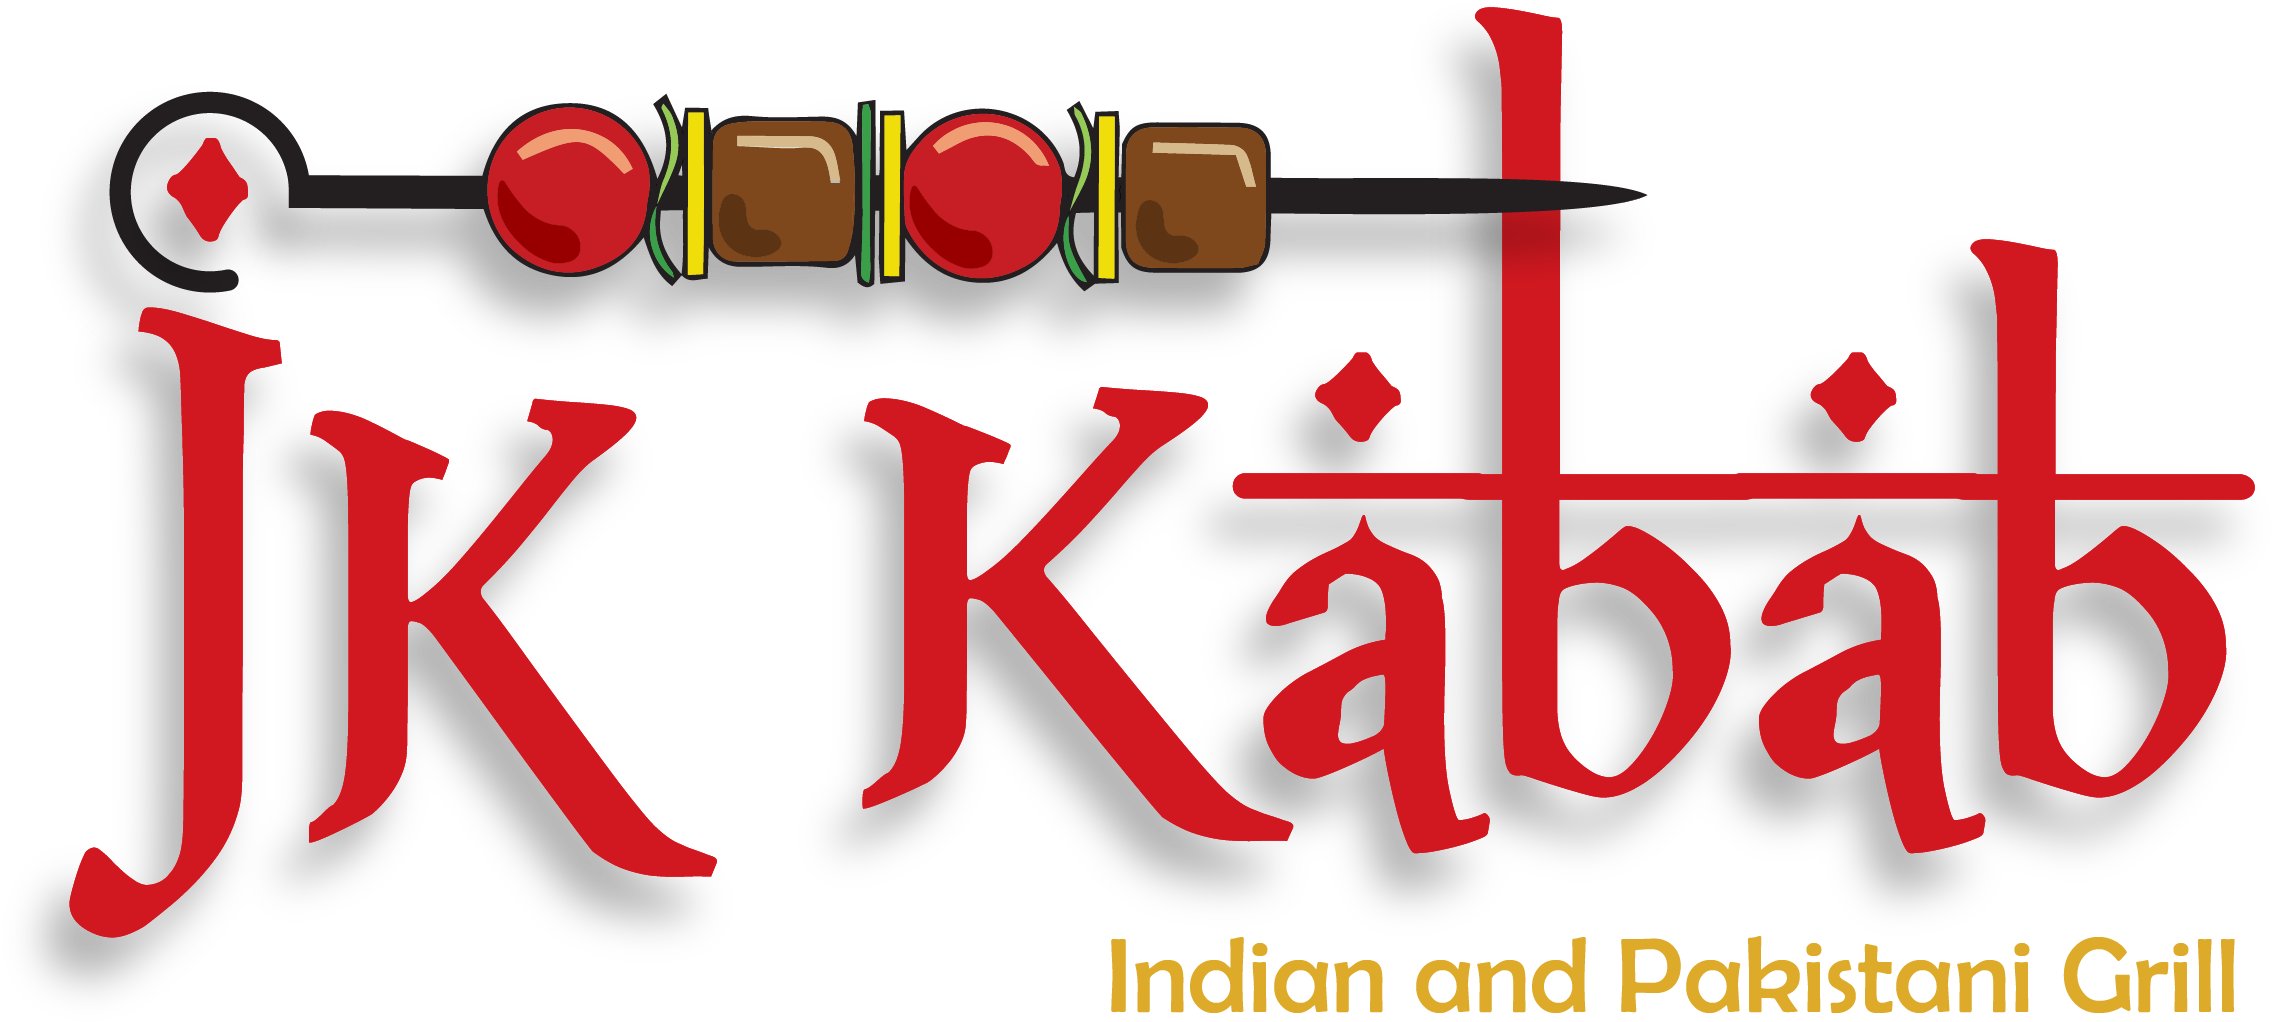 Jk Kabab Kebab Indian Cuisine Pakistani Cuisine Restaurant - Jk Kabab (2500x1383)